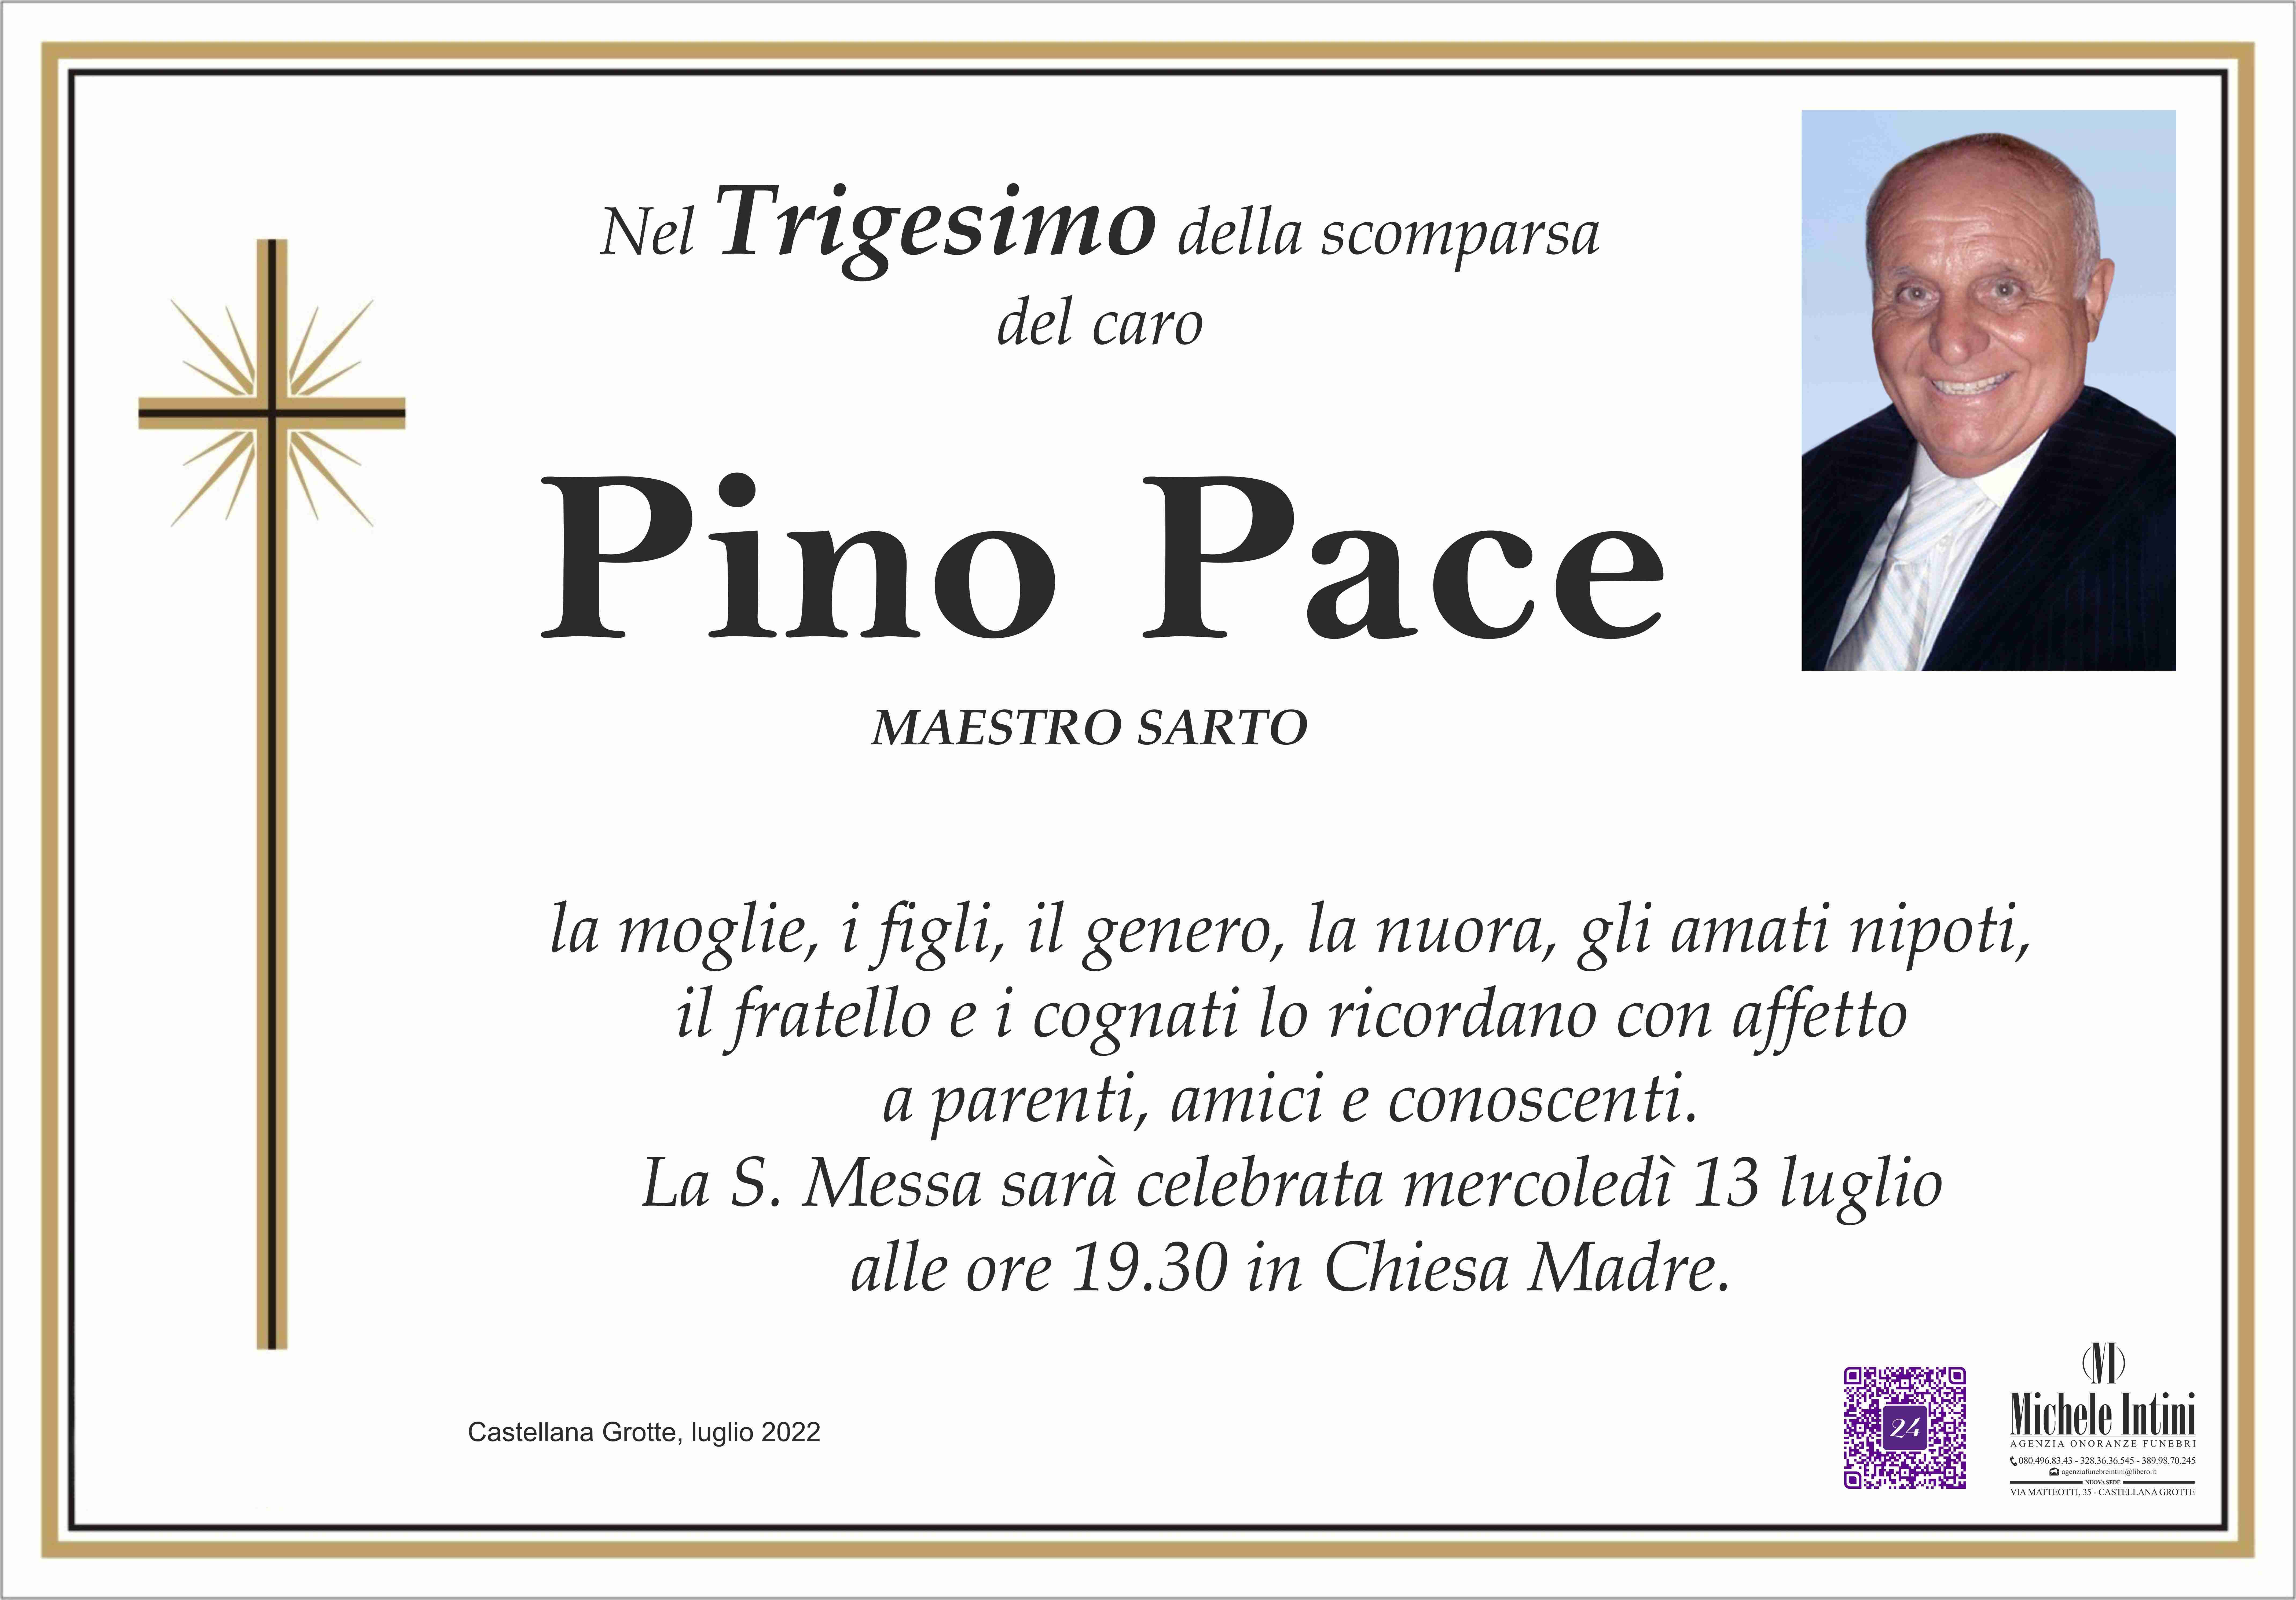 Pino Pace